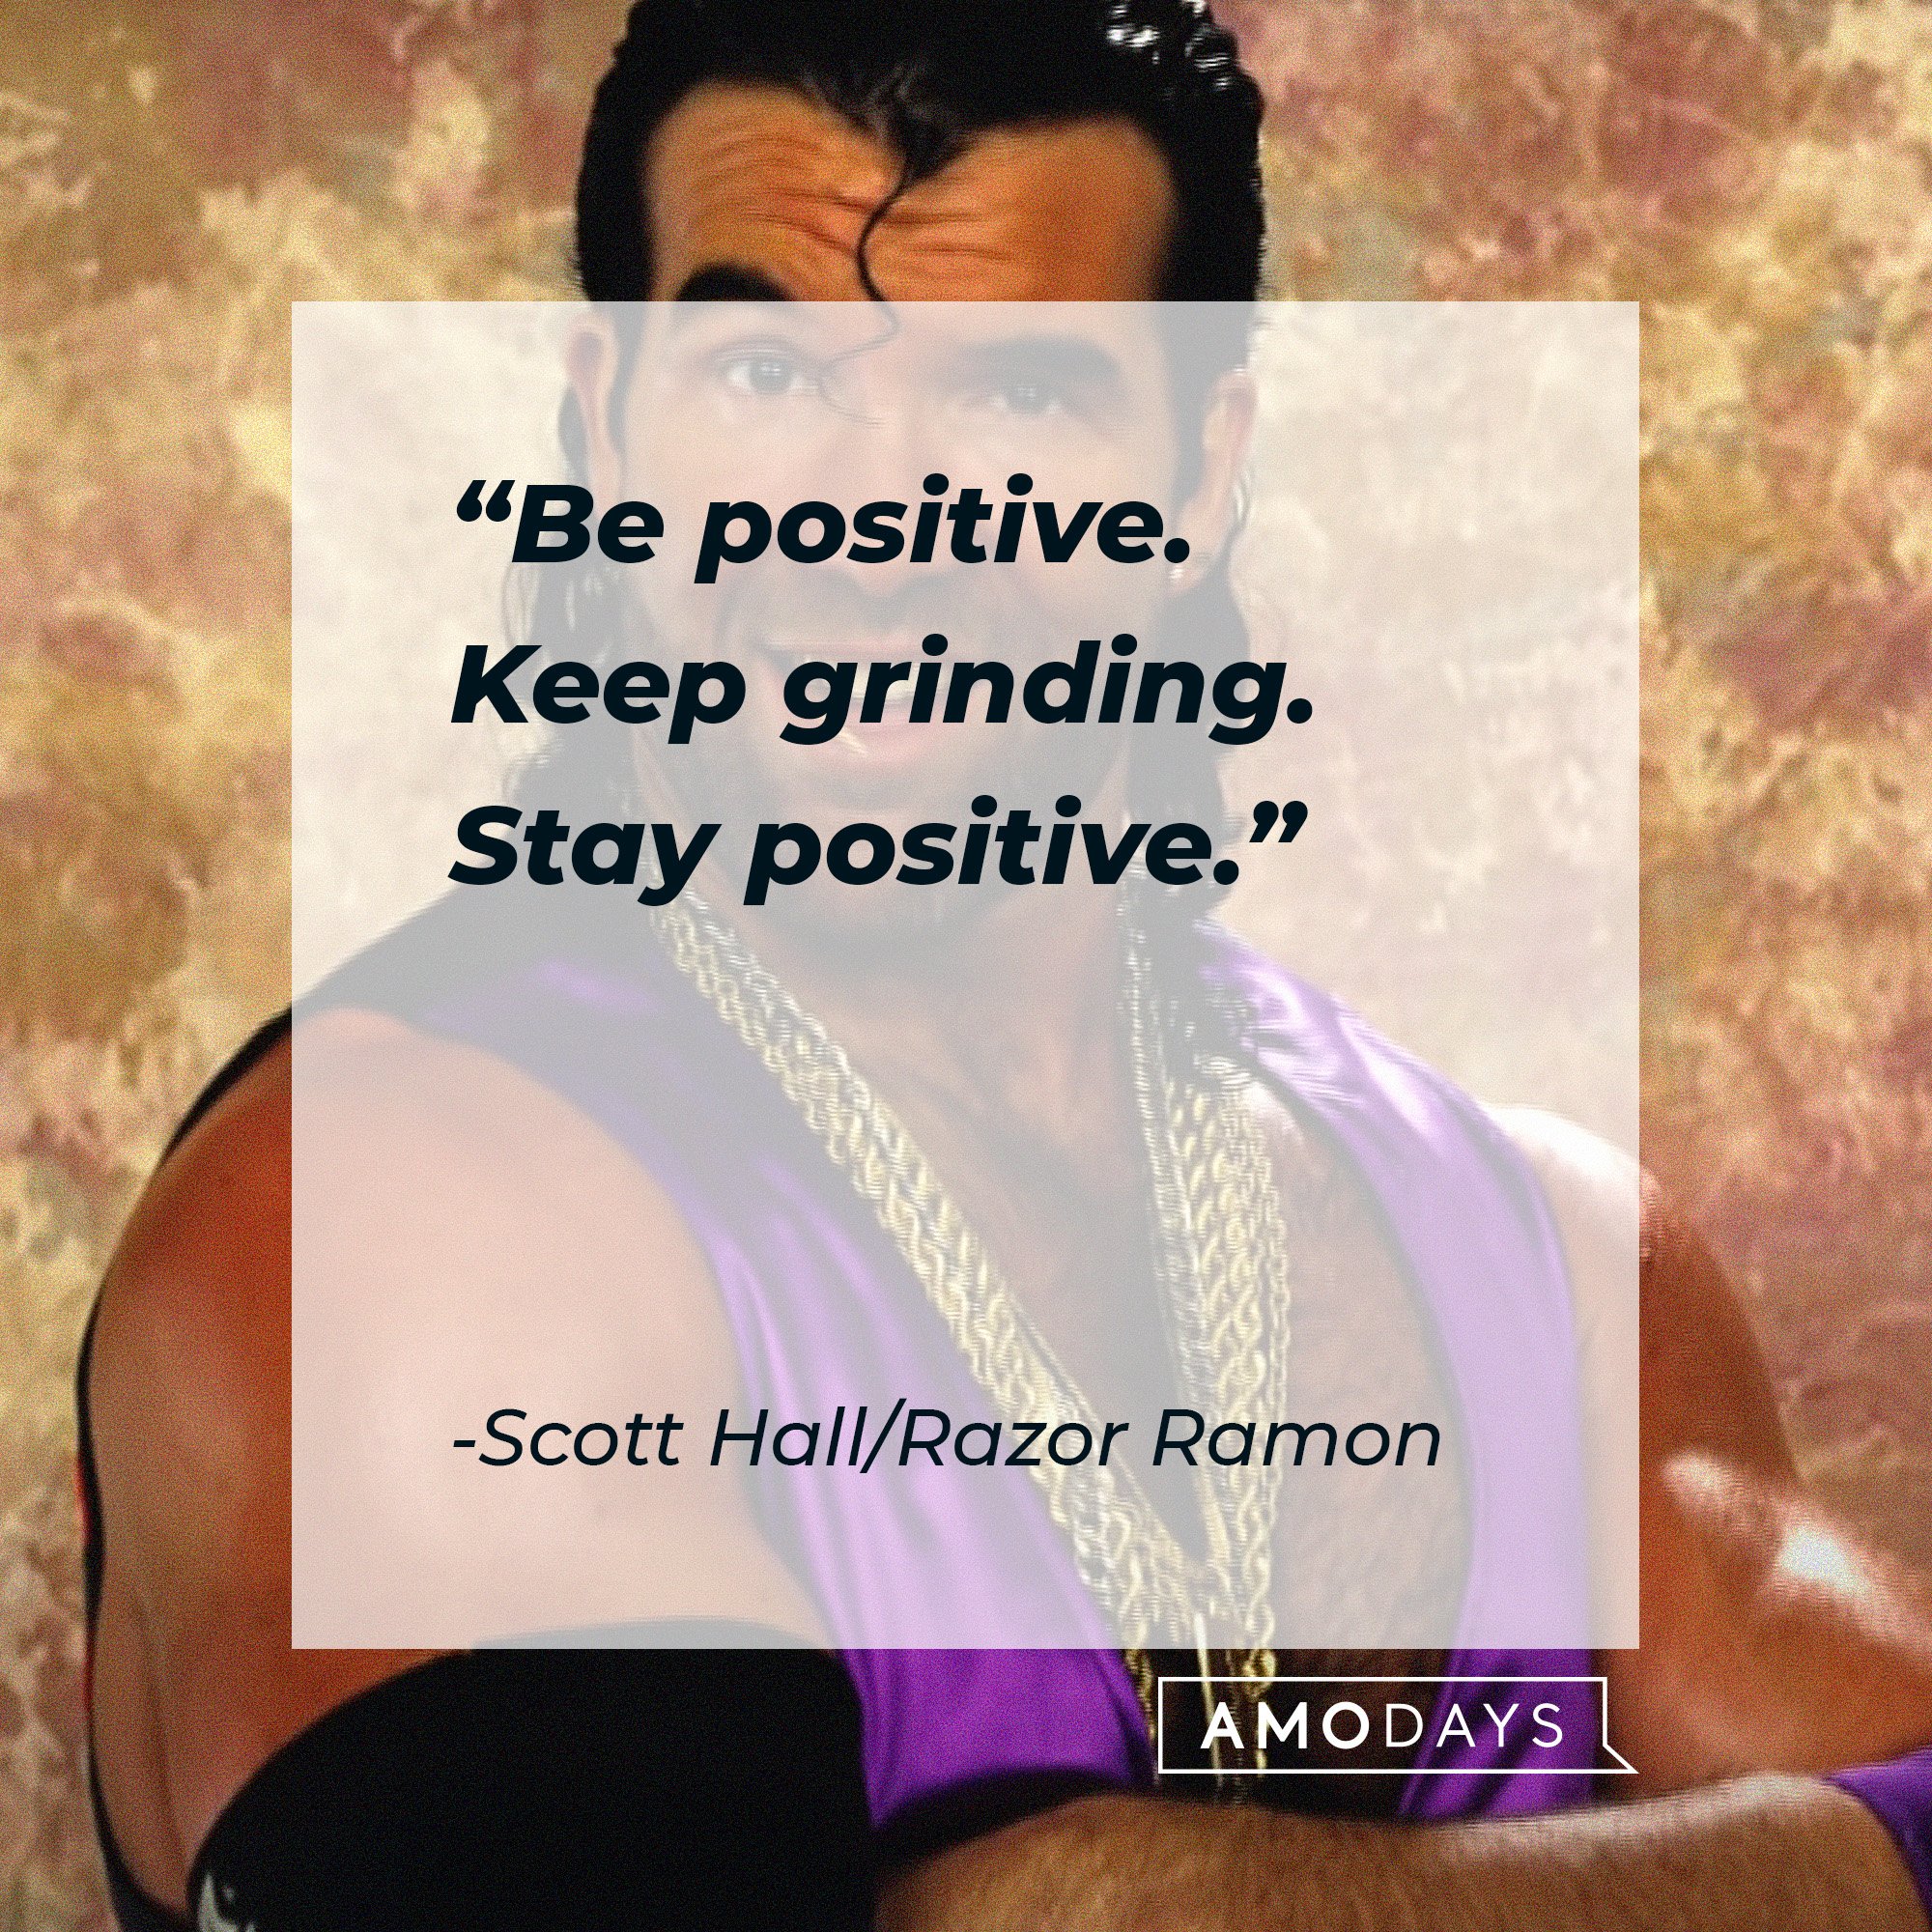 Scott Hall/Razor Ramon’s quote: "Be positive. Keep grinding. Stay positive." | Image: AmoDays